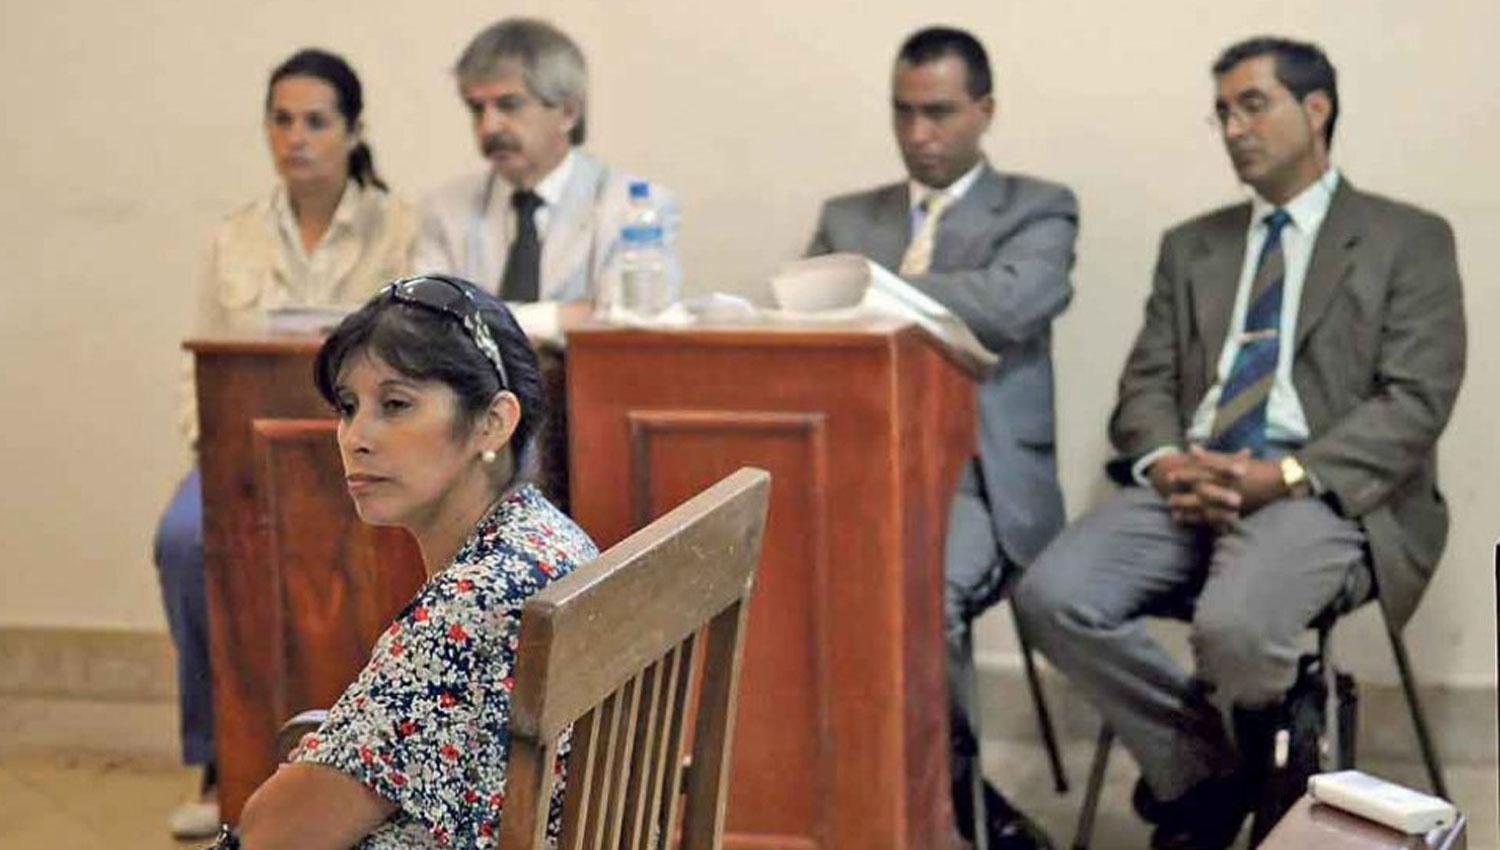 TESTIMONIO. Cristina Balmaceda, la esposa de Piccinetti declaró en el juicio.